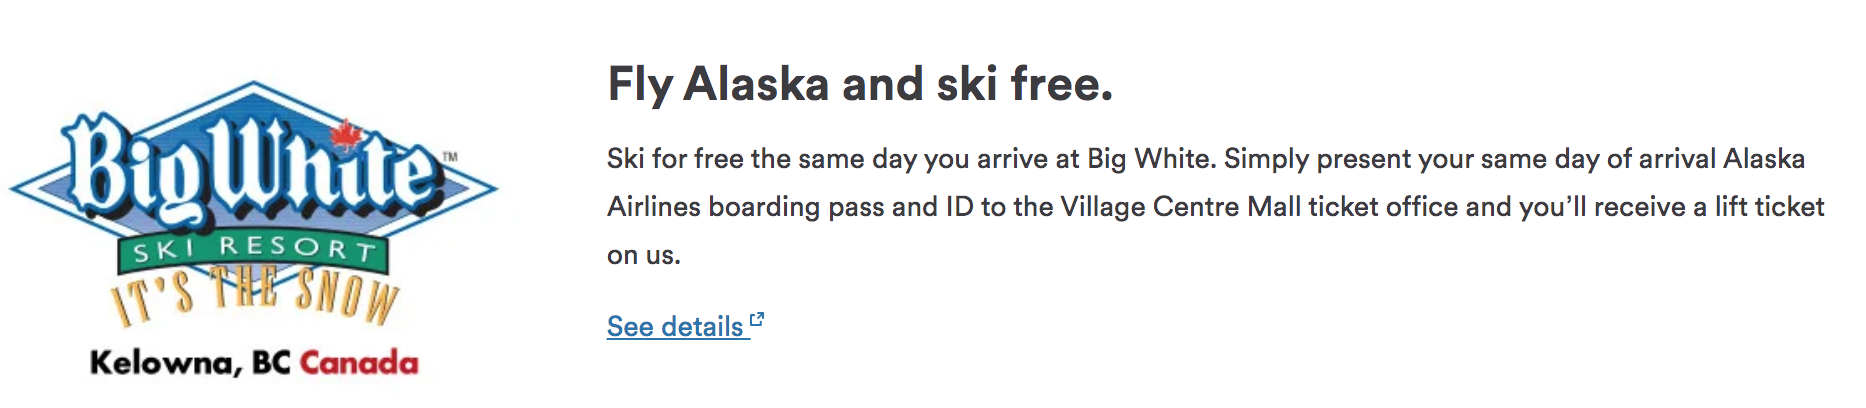 Alaska airlines free lift ticket